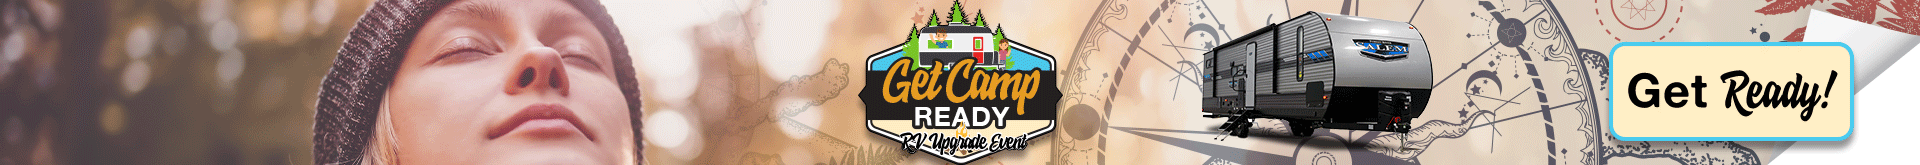 Get Camp Ready